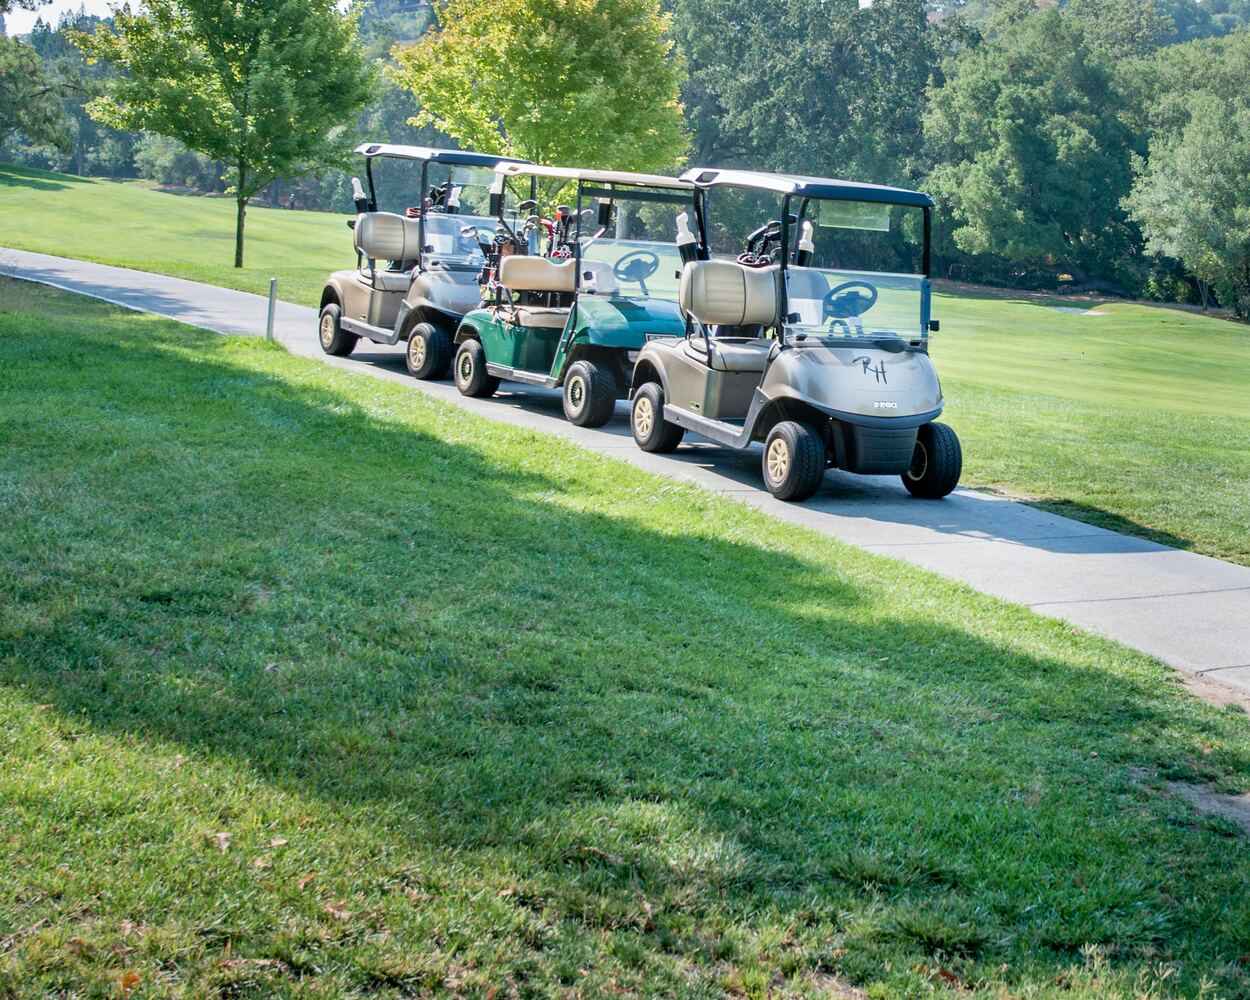 Three golf carts in a row.